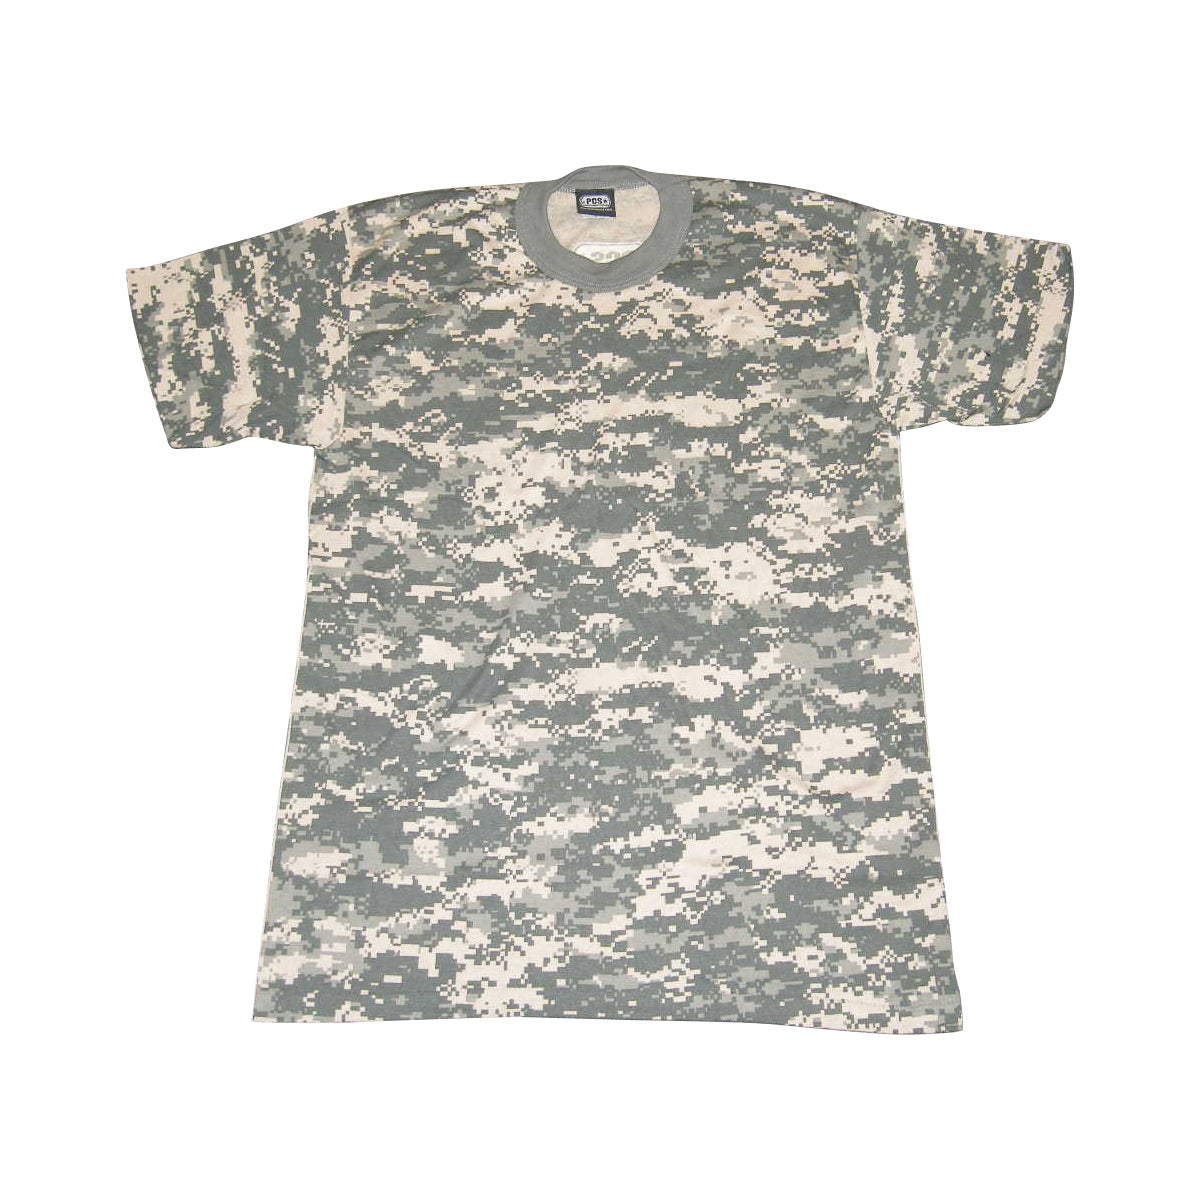 PCS ACU Digital Camouflage Tee short sleeve cotton T-Shirt adult LARGE